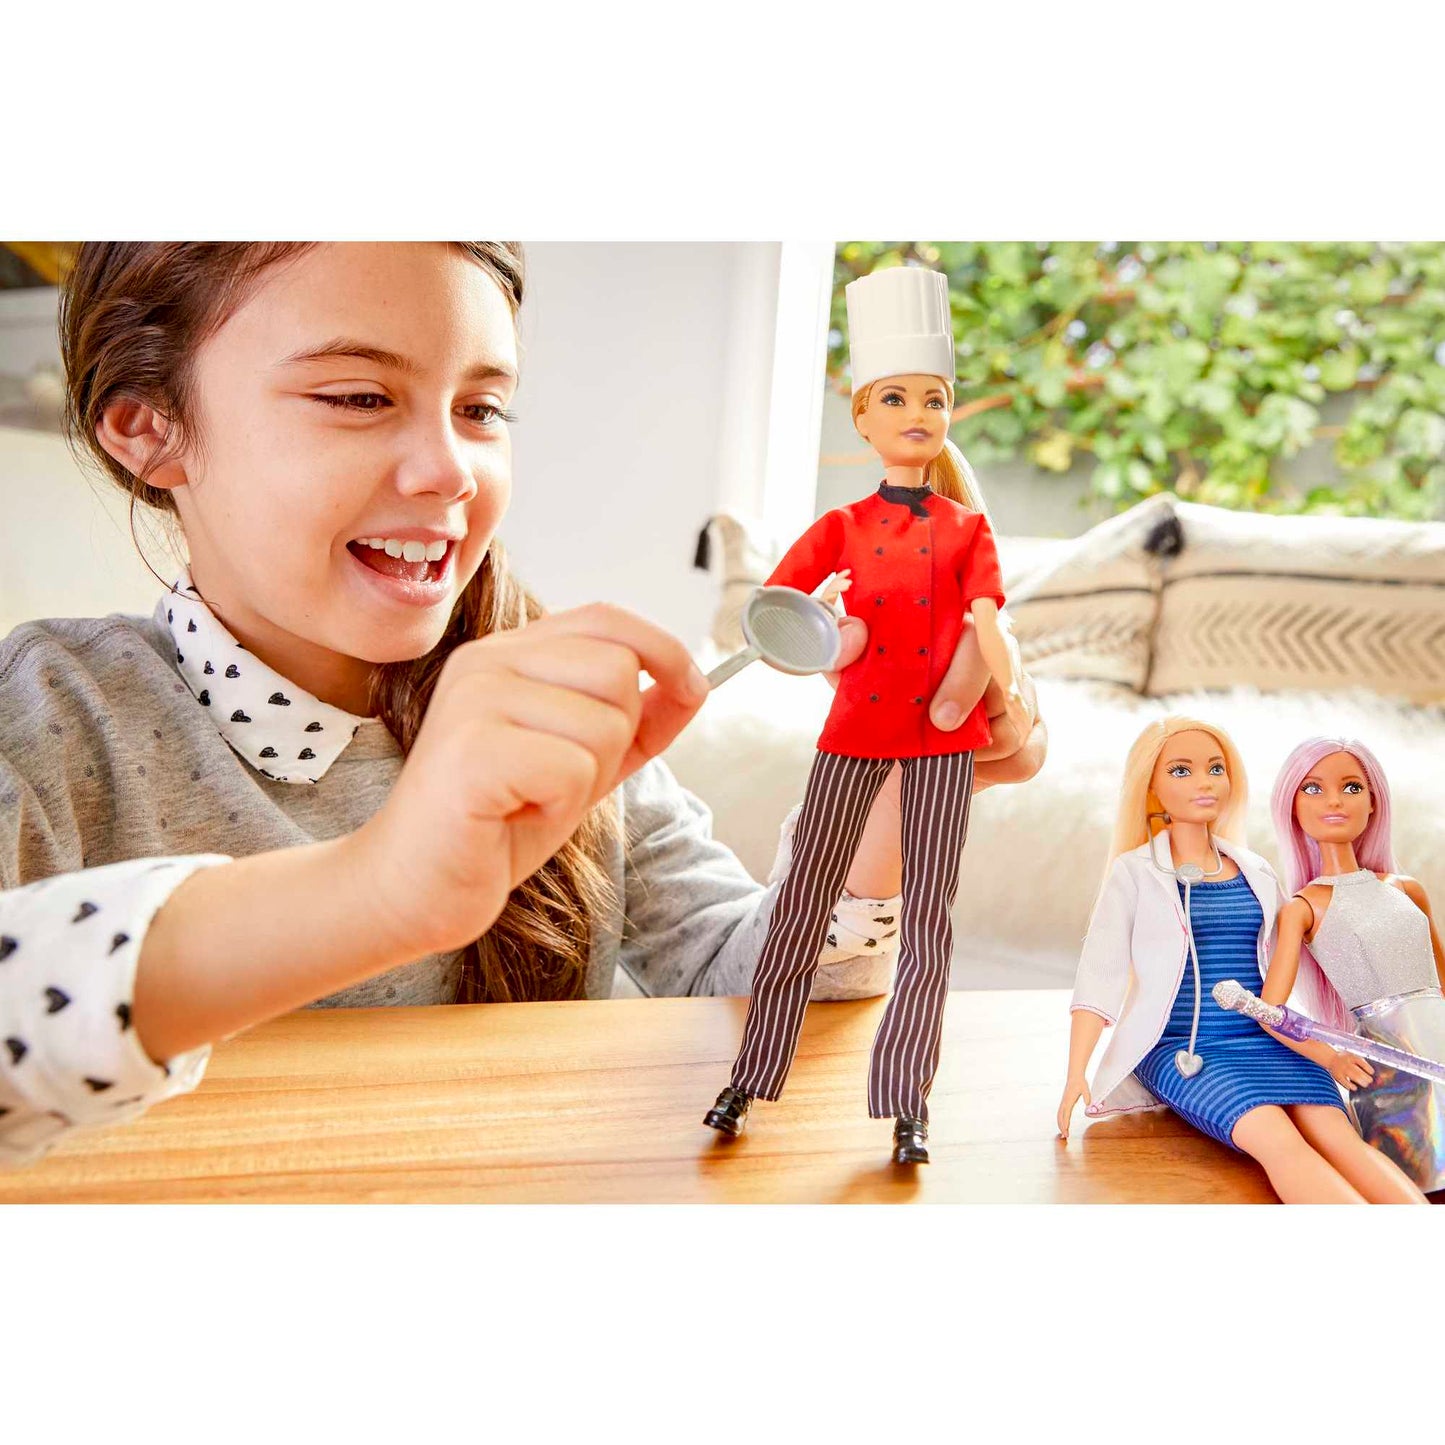 Barbie Career Doll - Assorted*